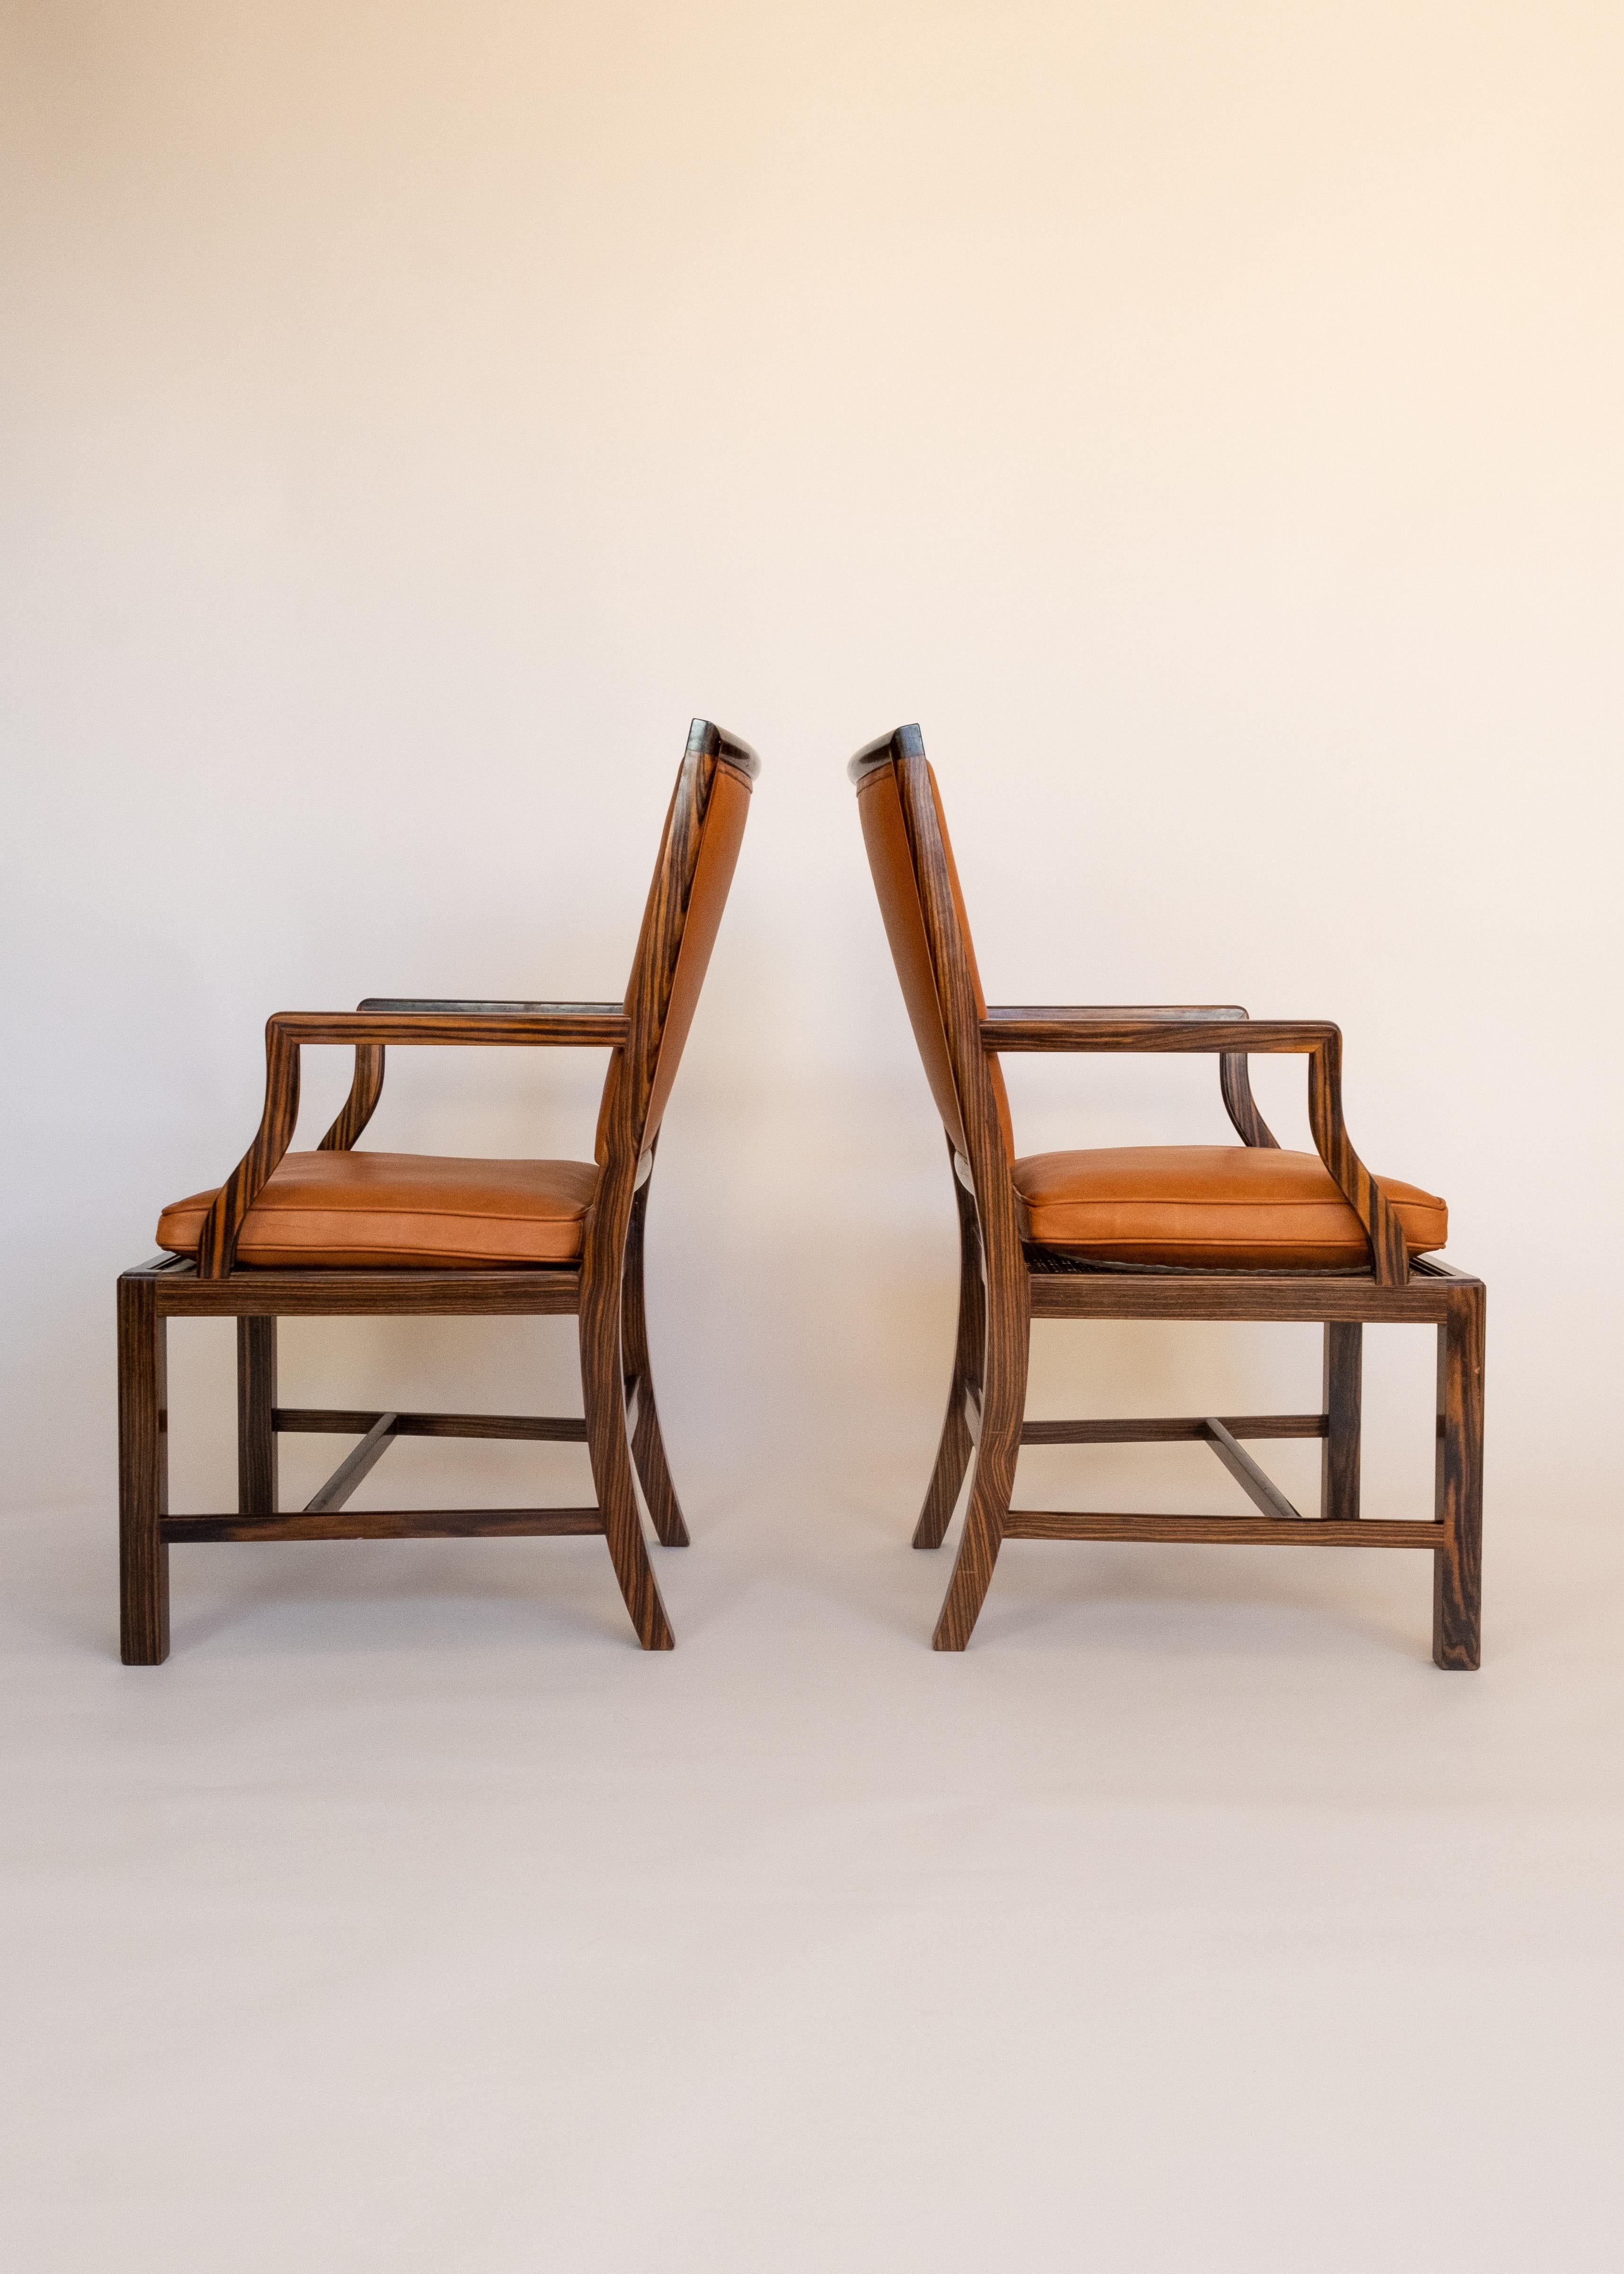 Early 20th Century Pair of Armchairs by Lars W. Schlyter for Slöjdföreningens Skola For Sale